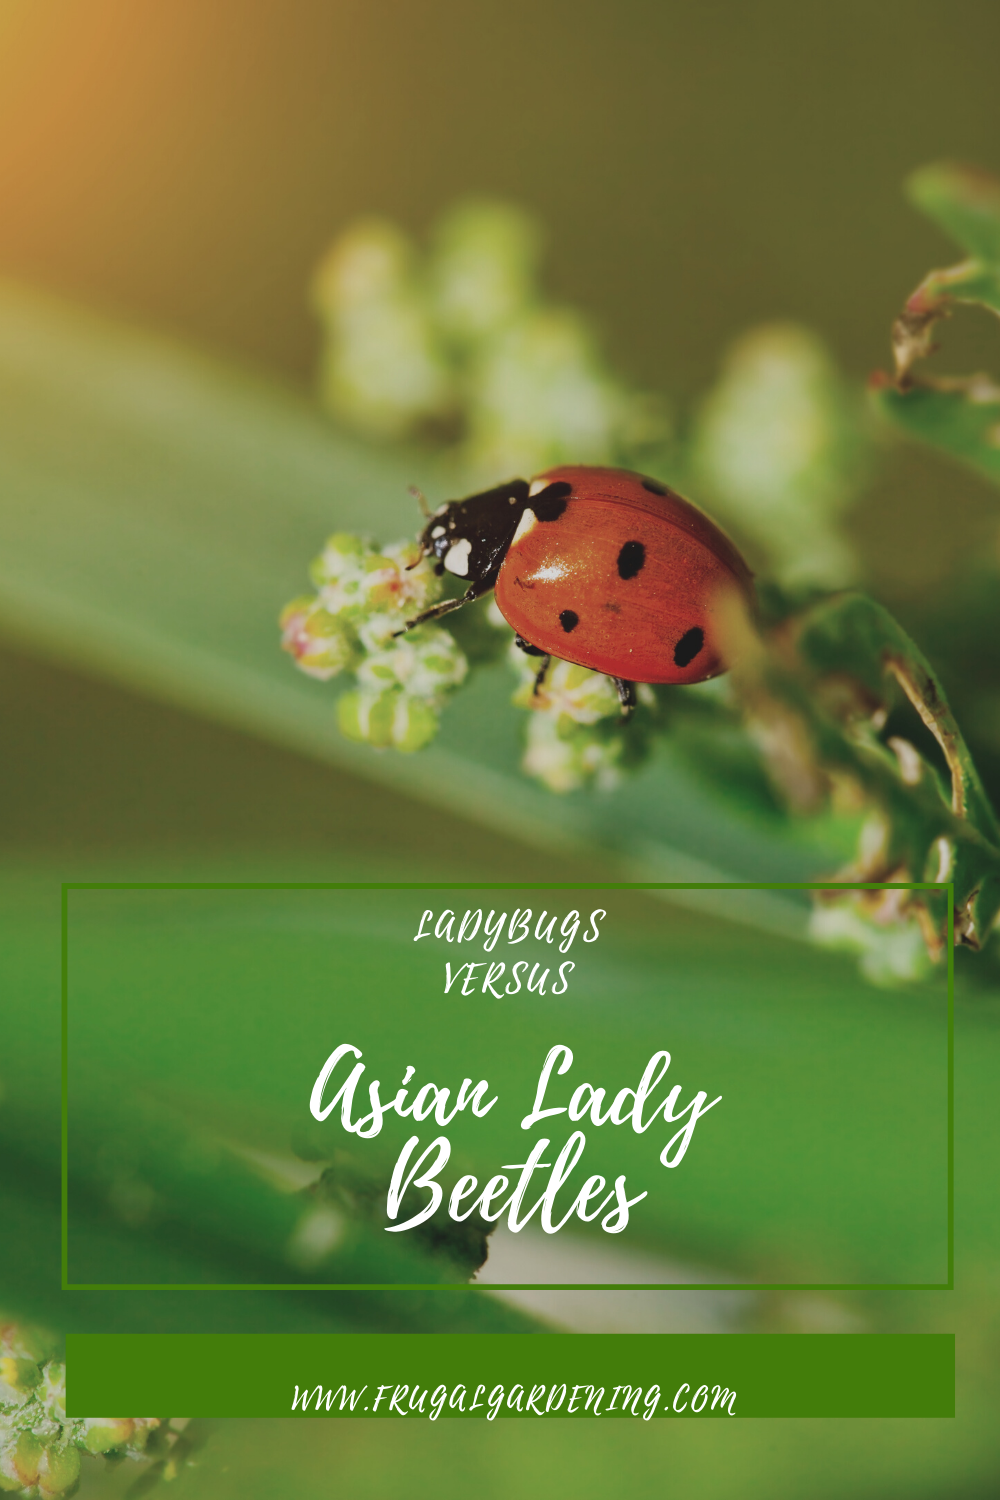 Ladybugs Versus Asian Lady Beetles